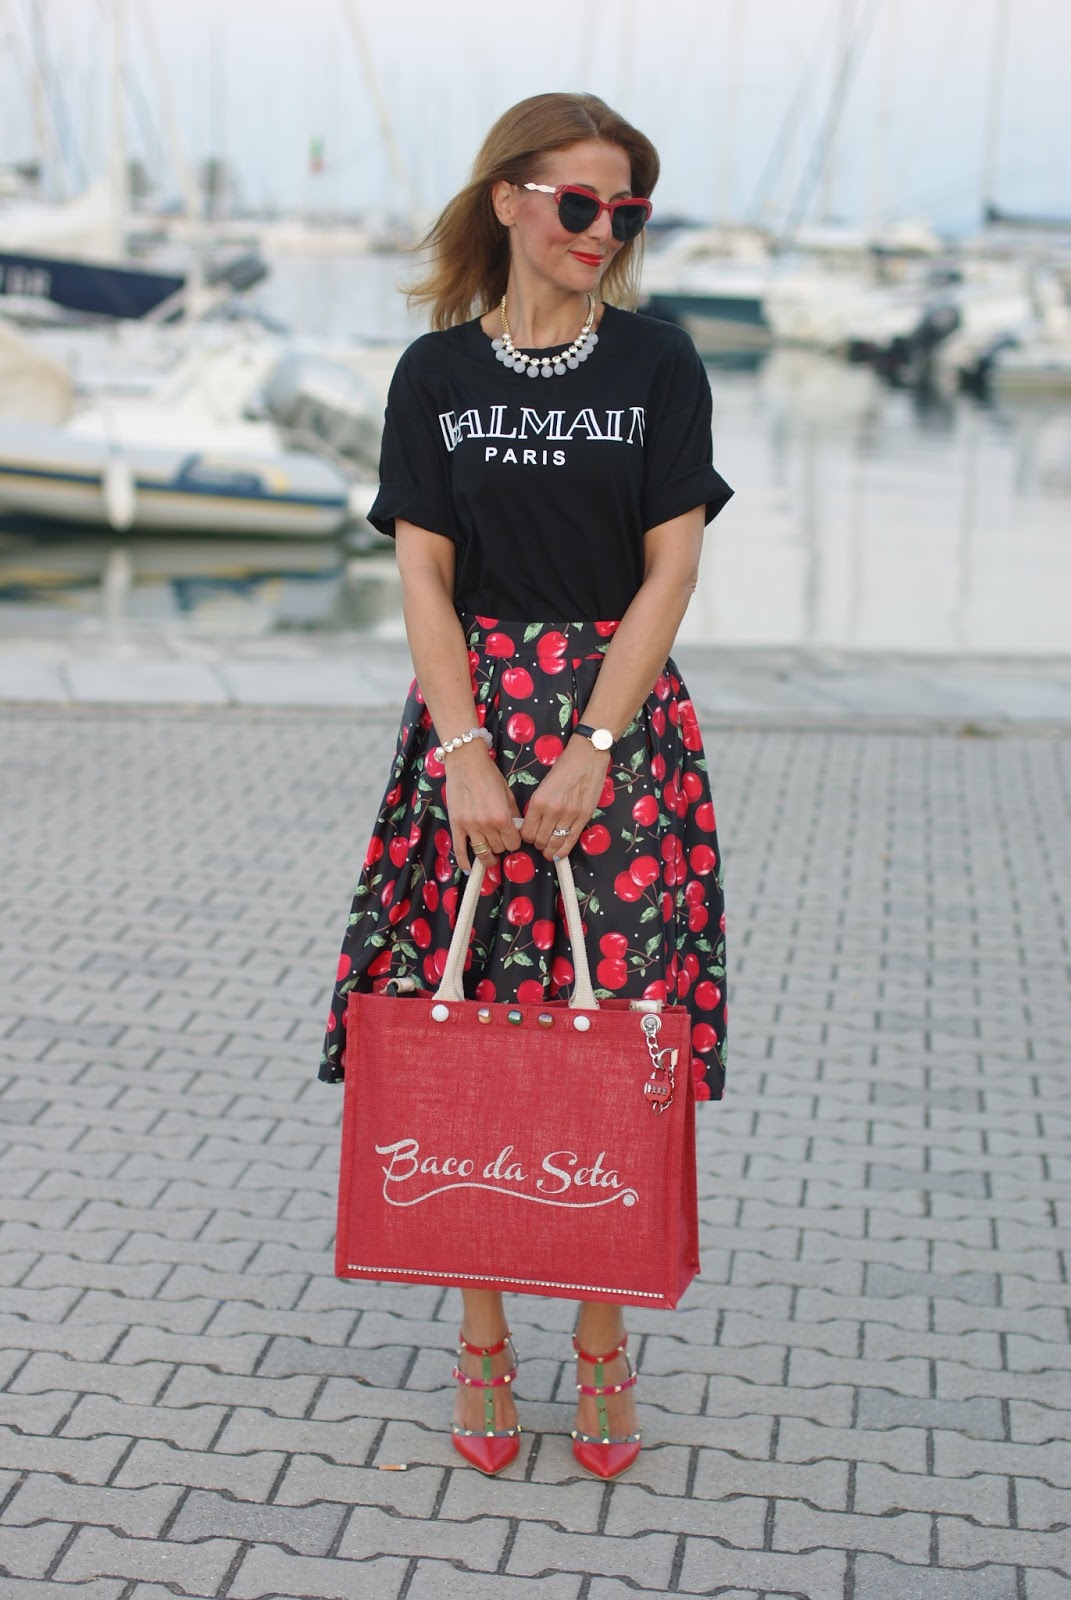 Baco da Seta anti-theft bag, borsa antifurto, jute bag, rockstud lookalike shoes and Balmain t-shirt on Fashion and Cookies fashion blog